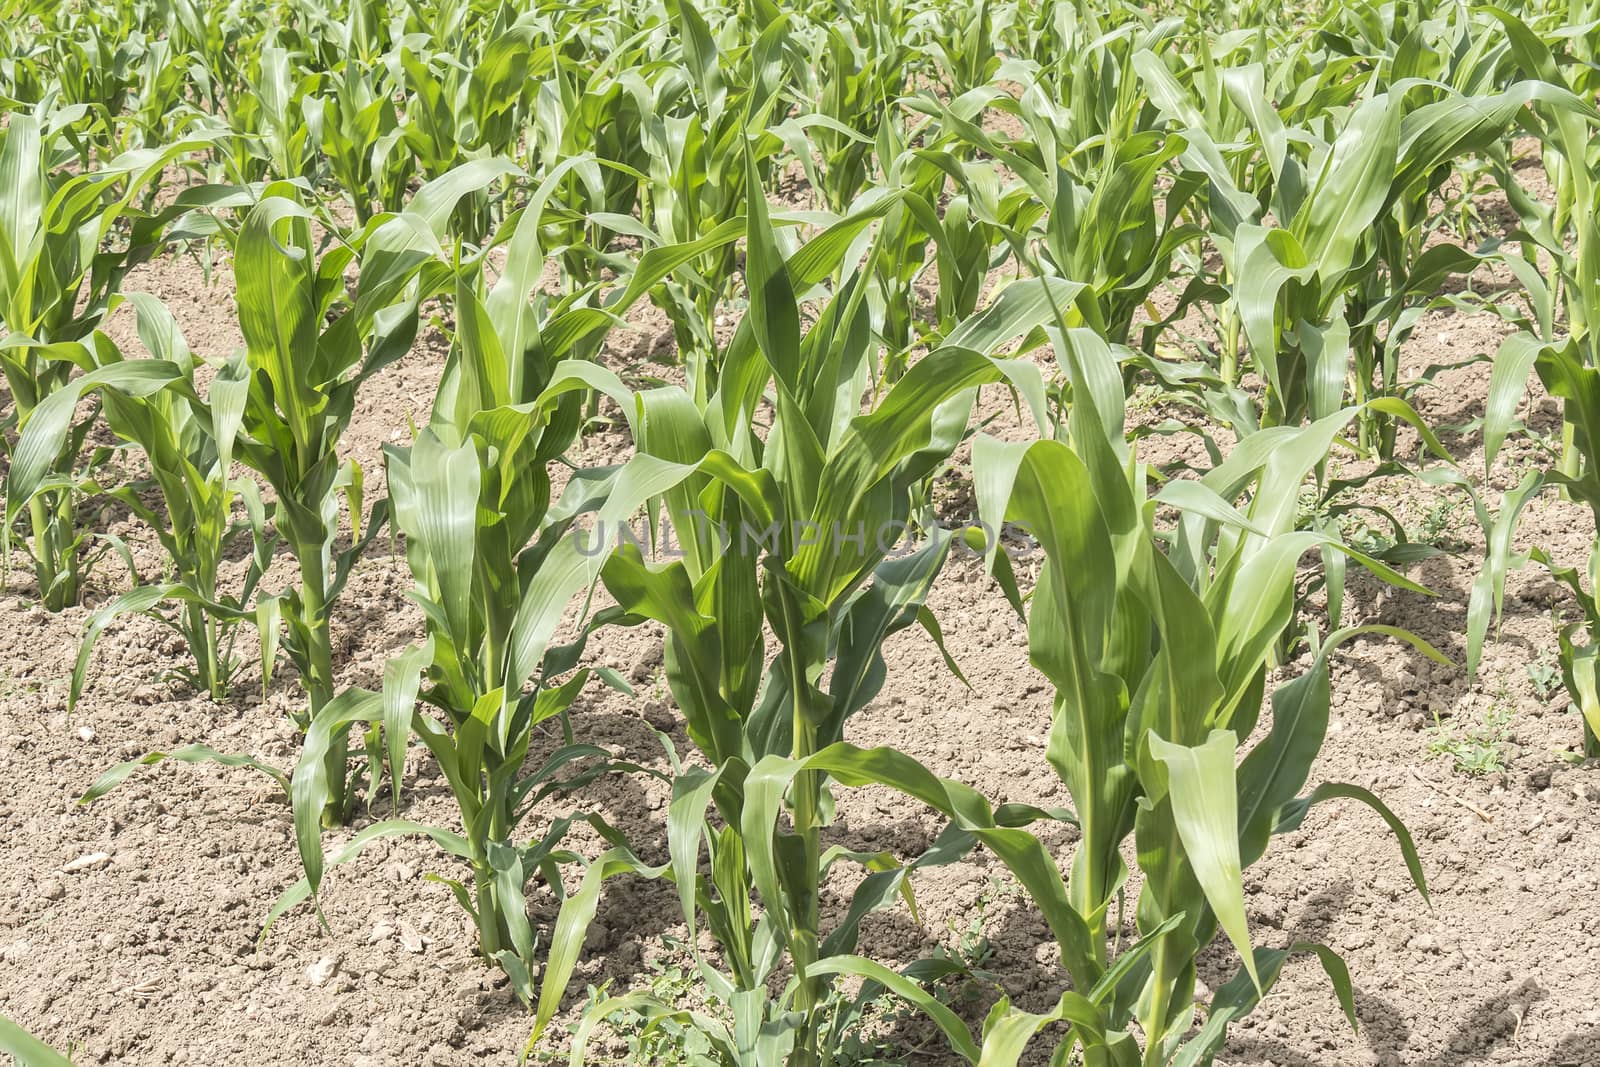 Corn crop growing